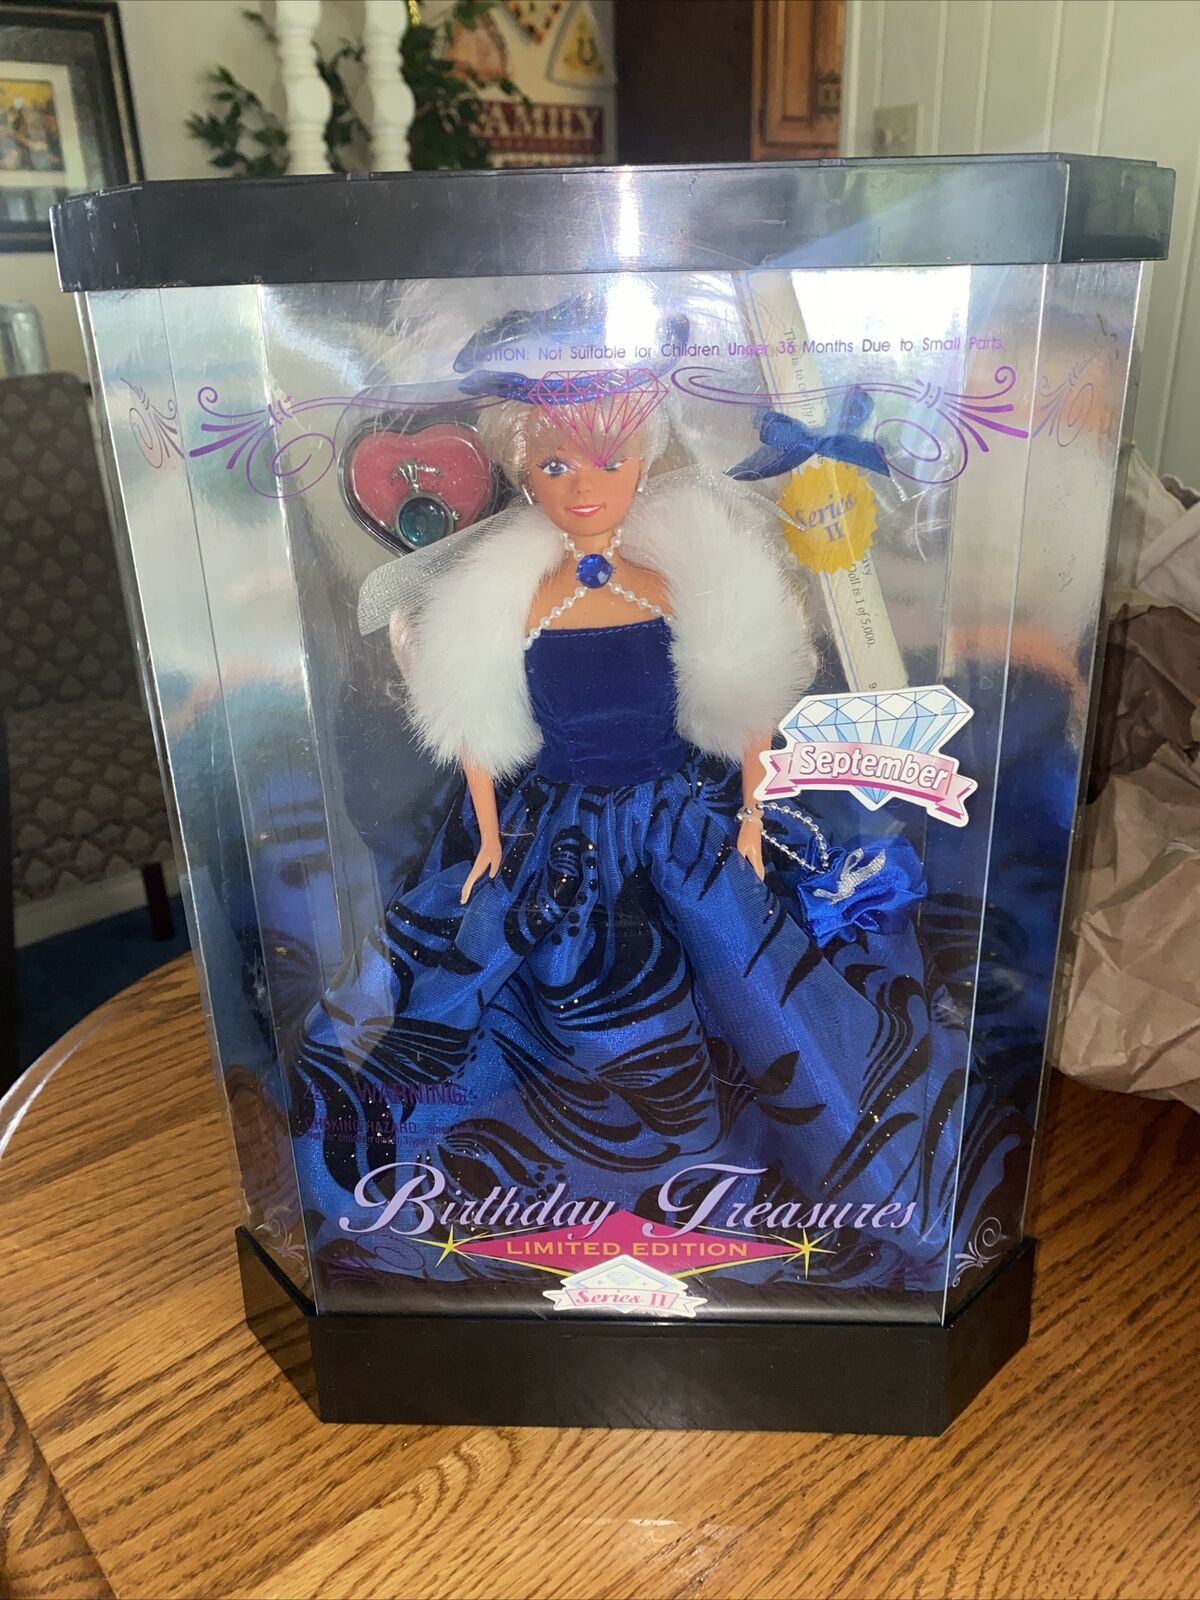 Barbie Doll Birthday Treasures Limited Edition Series Ii September New